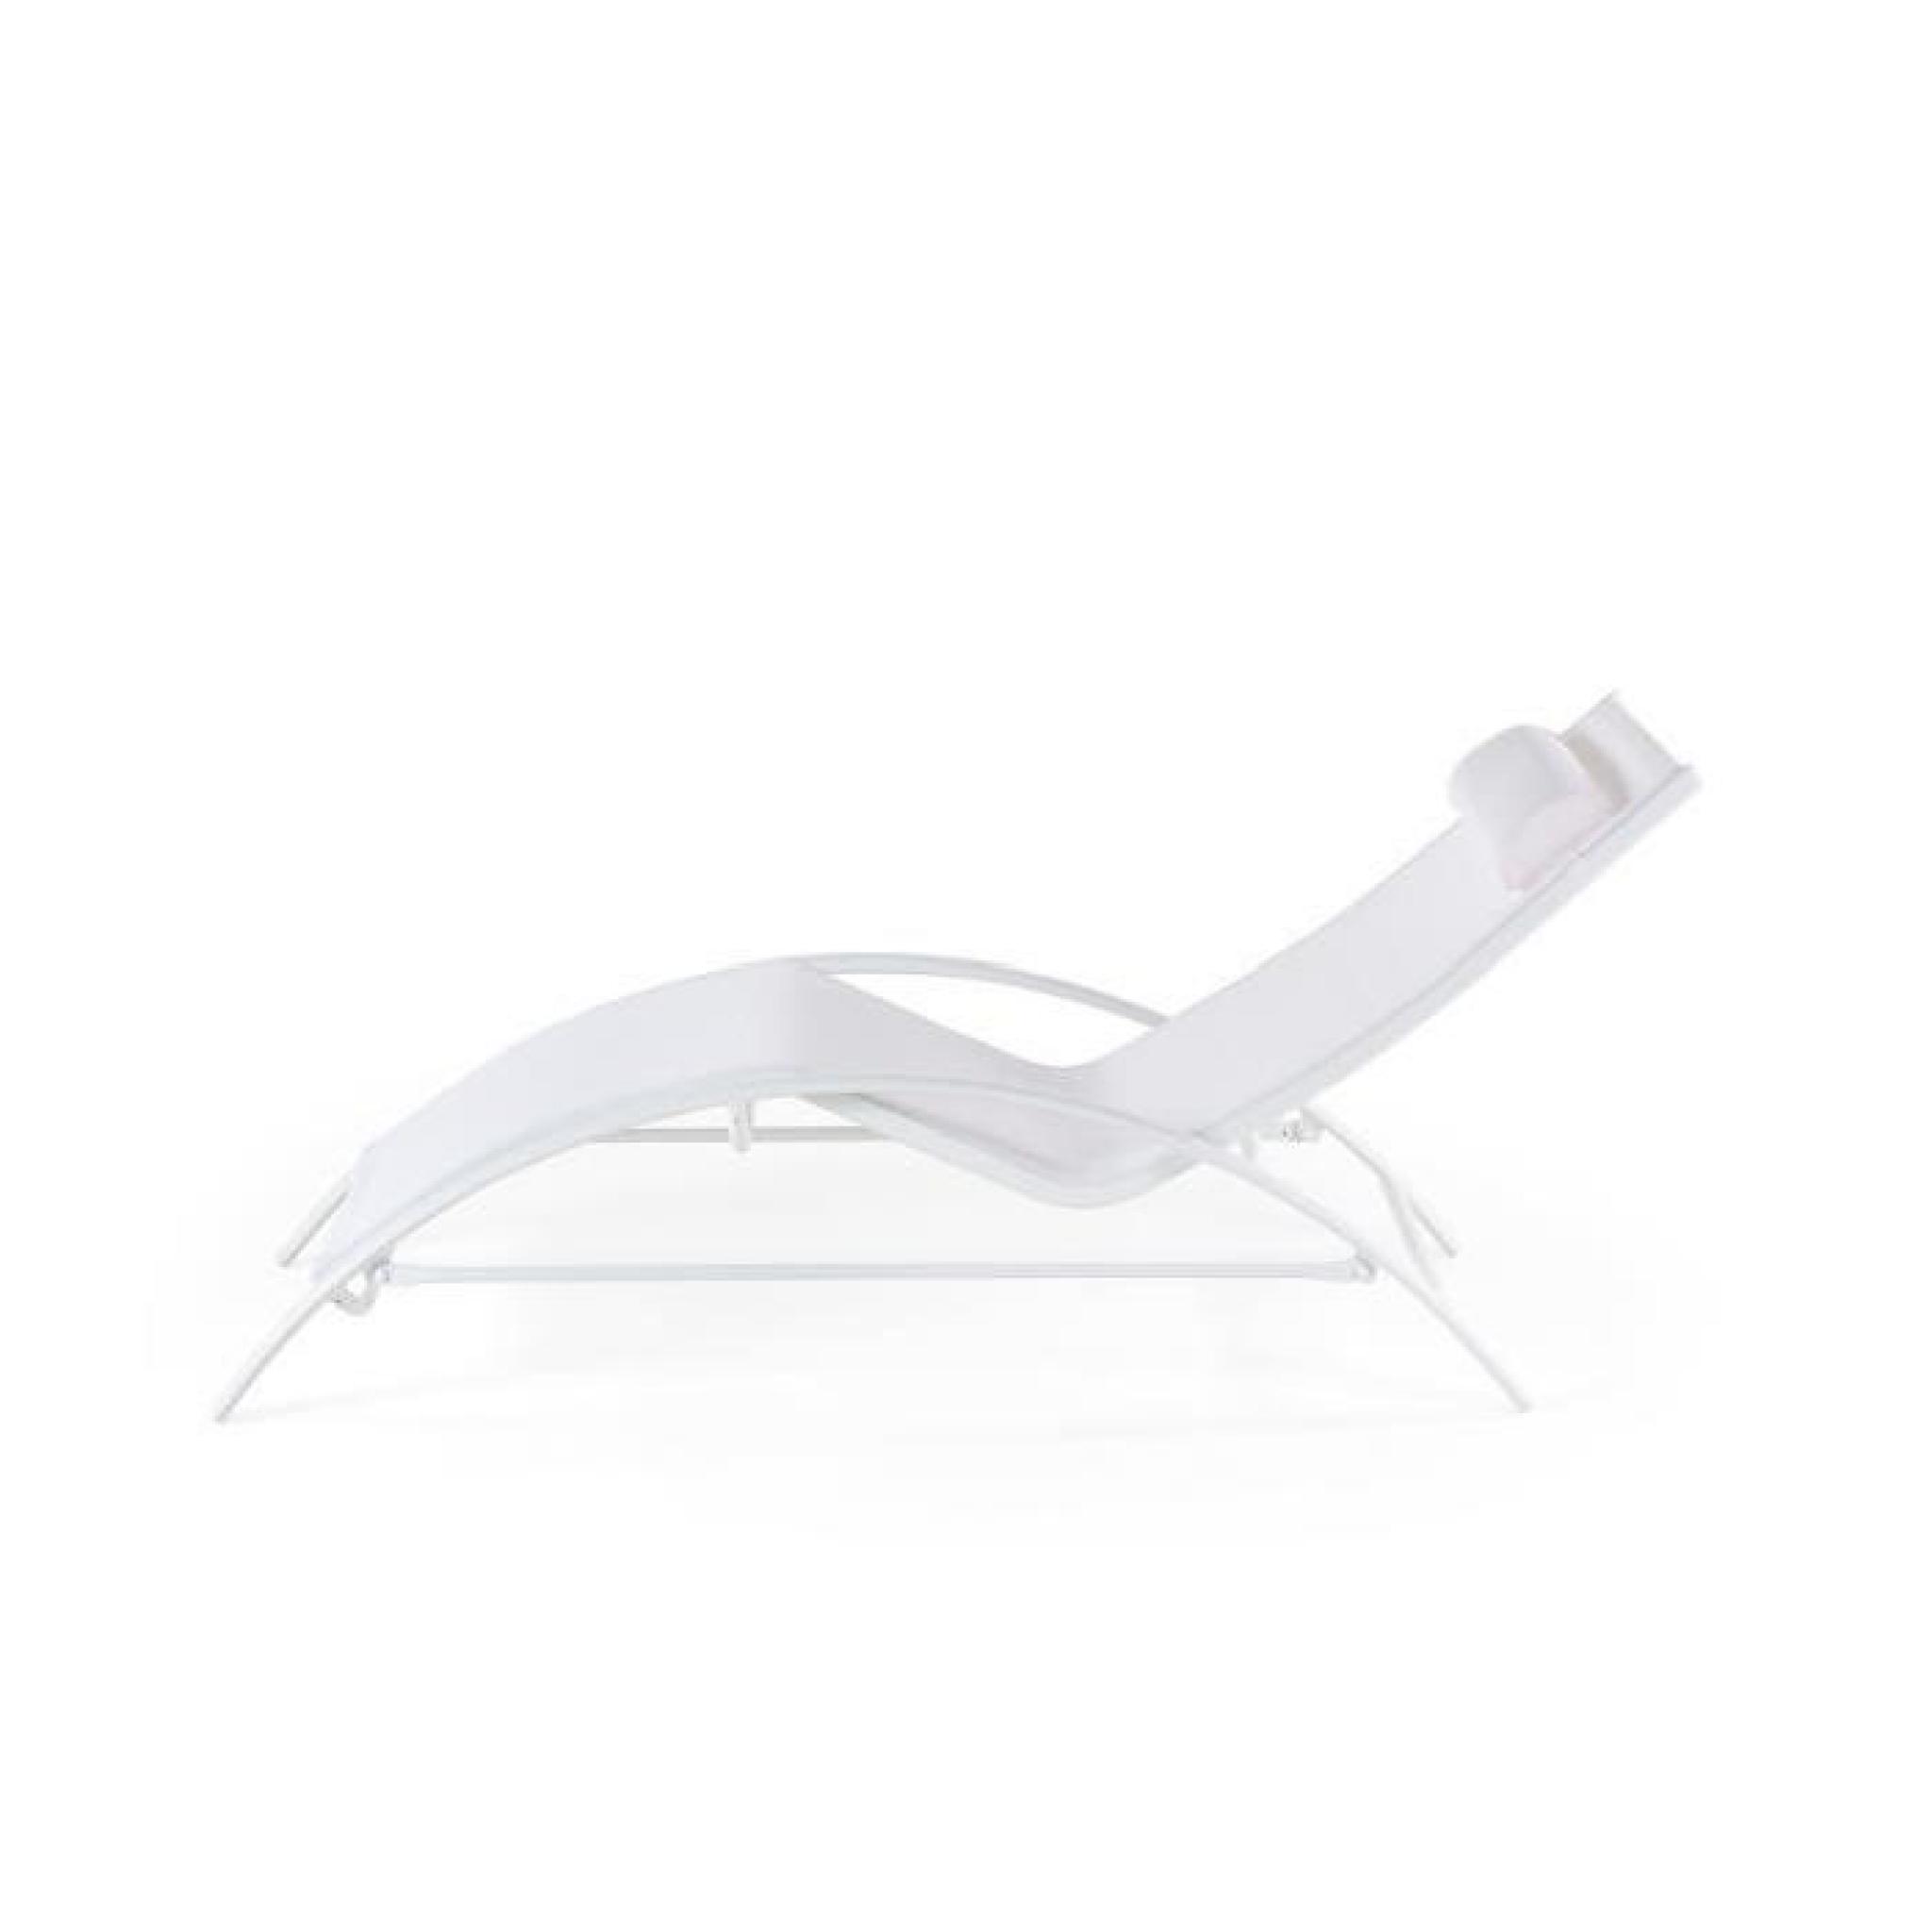 Transat en aluminium - Chaise longue inclinable - blanc - Catania pas cher